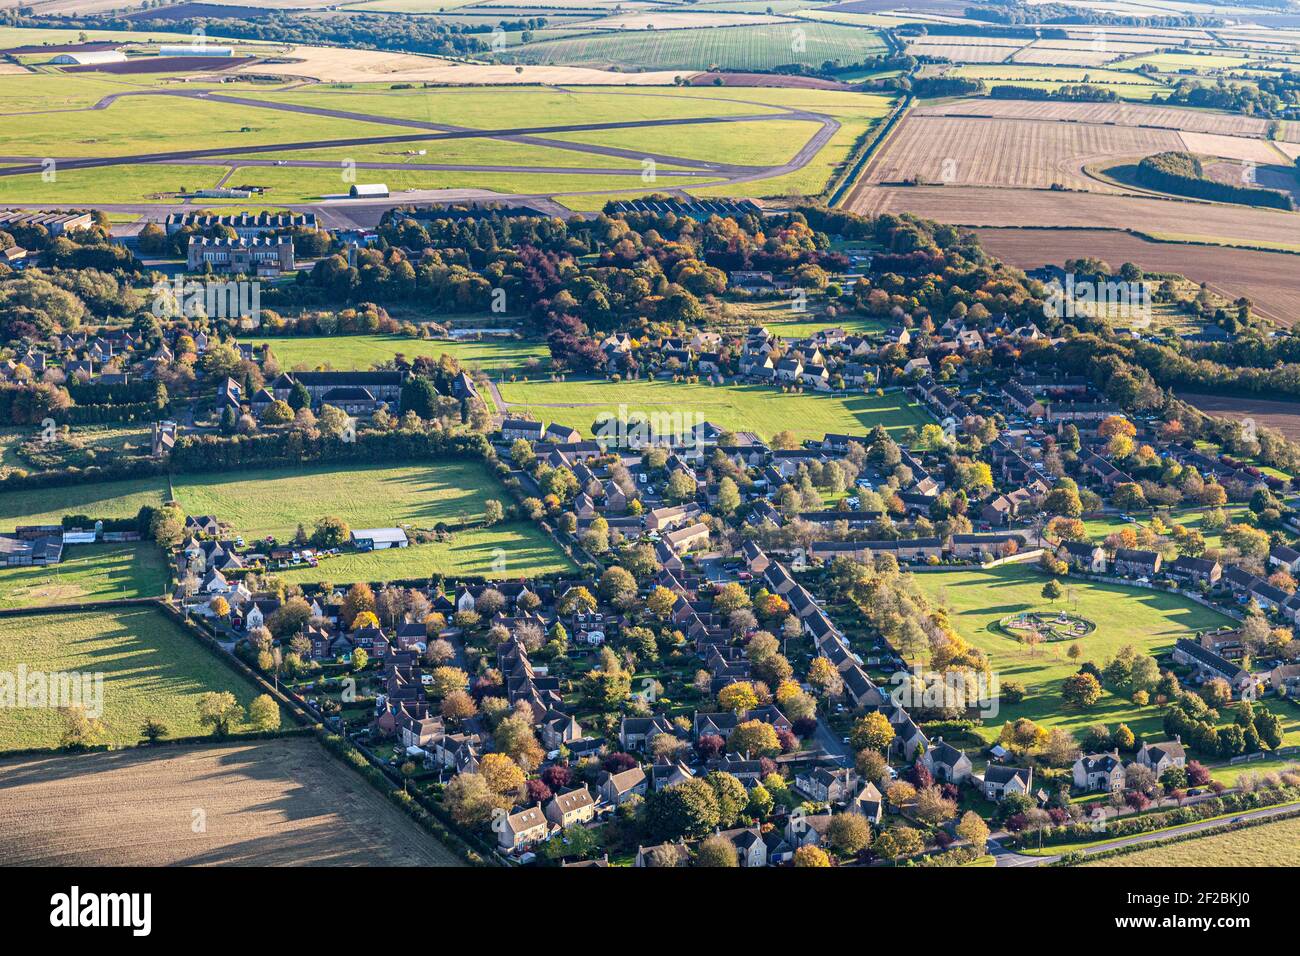 Una vista aérea de la aldea de Cotswold de Upper Rissington, Gloucestershire, Reino Unido - Little Rissington Airfield es visible en el fondo. Foto de stock